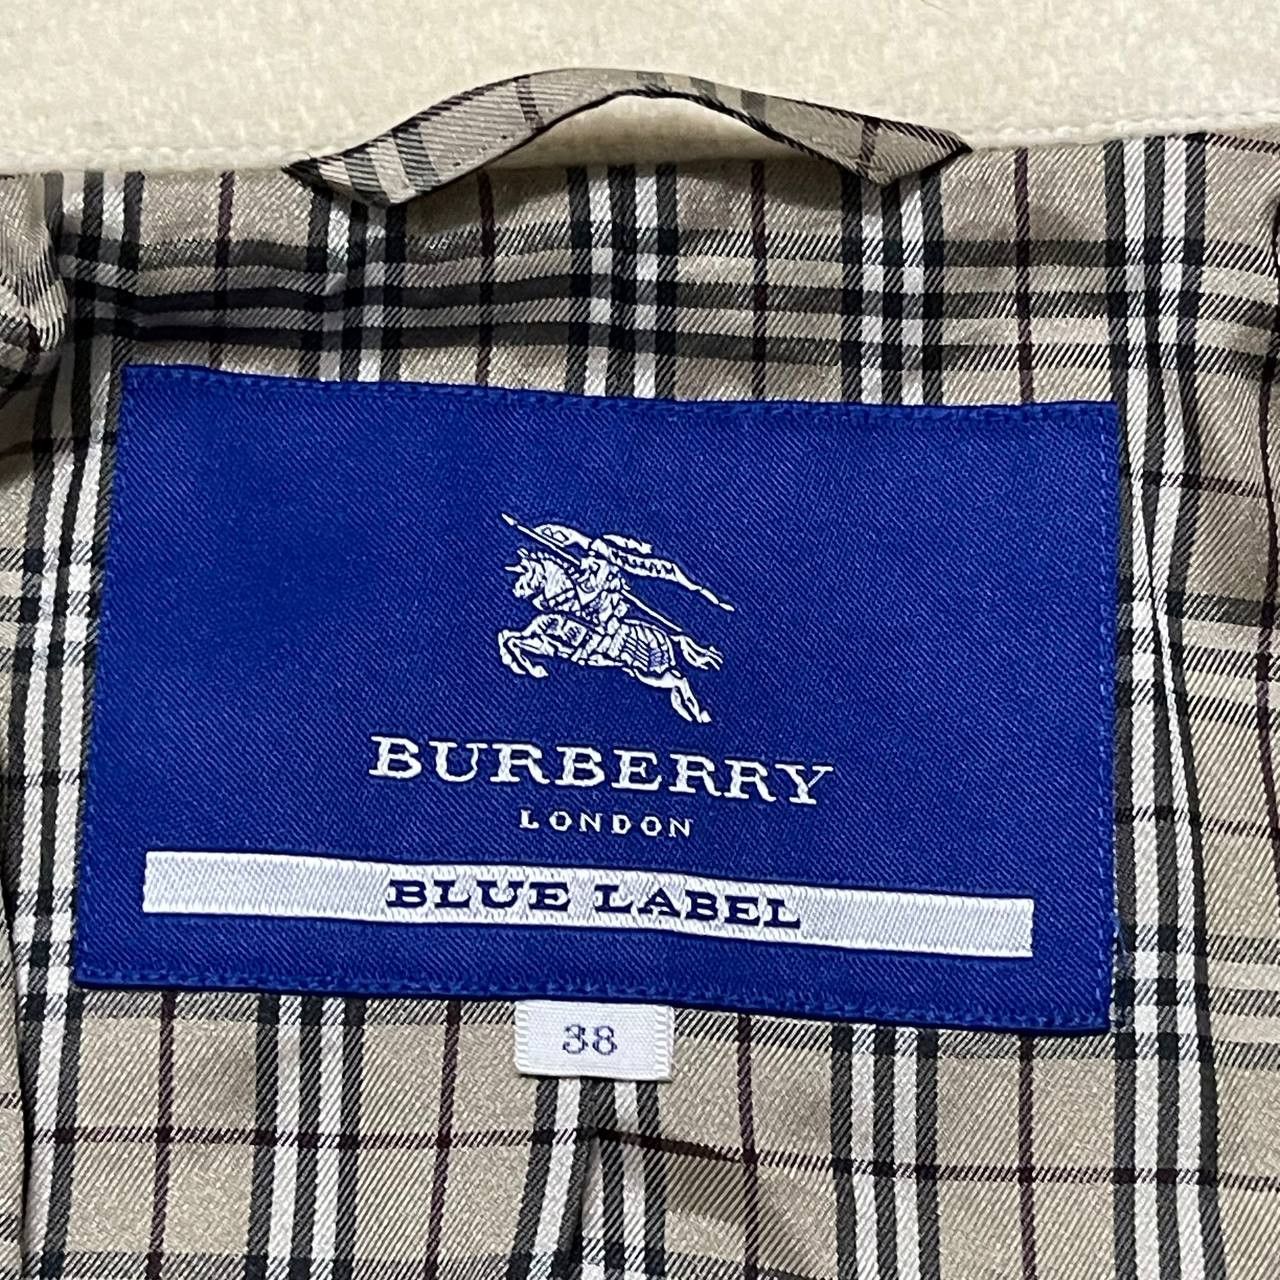 Vintage Burberry London Blue Label Nova check Wool Coat - 9